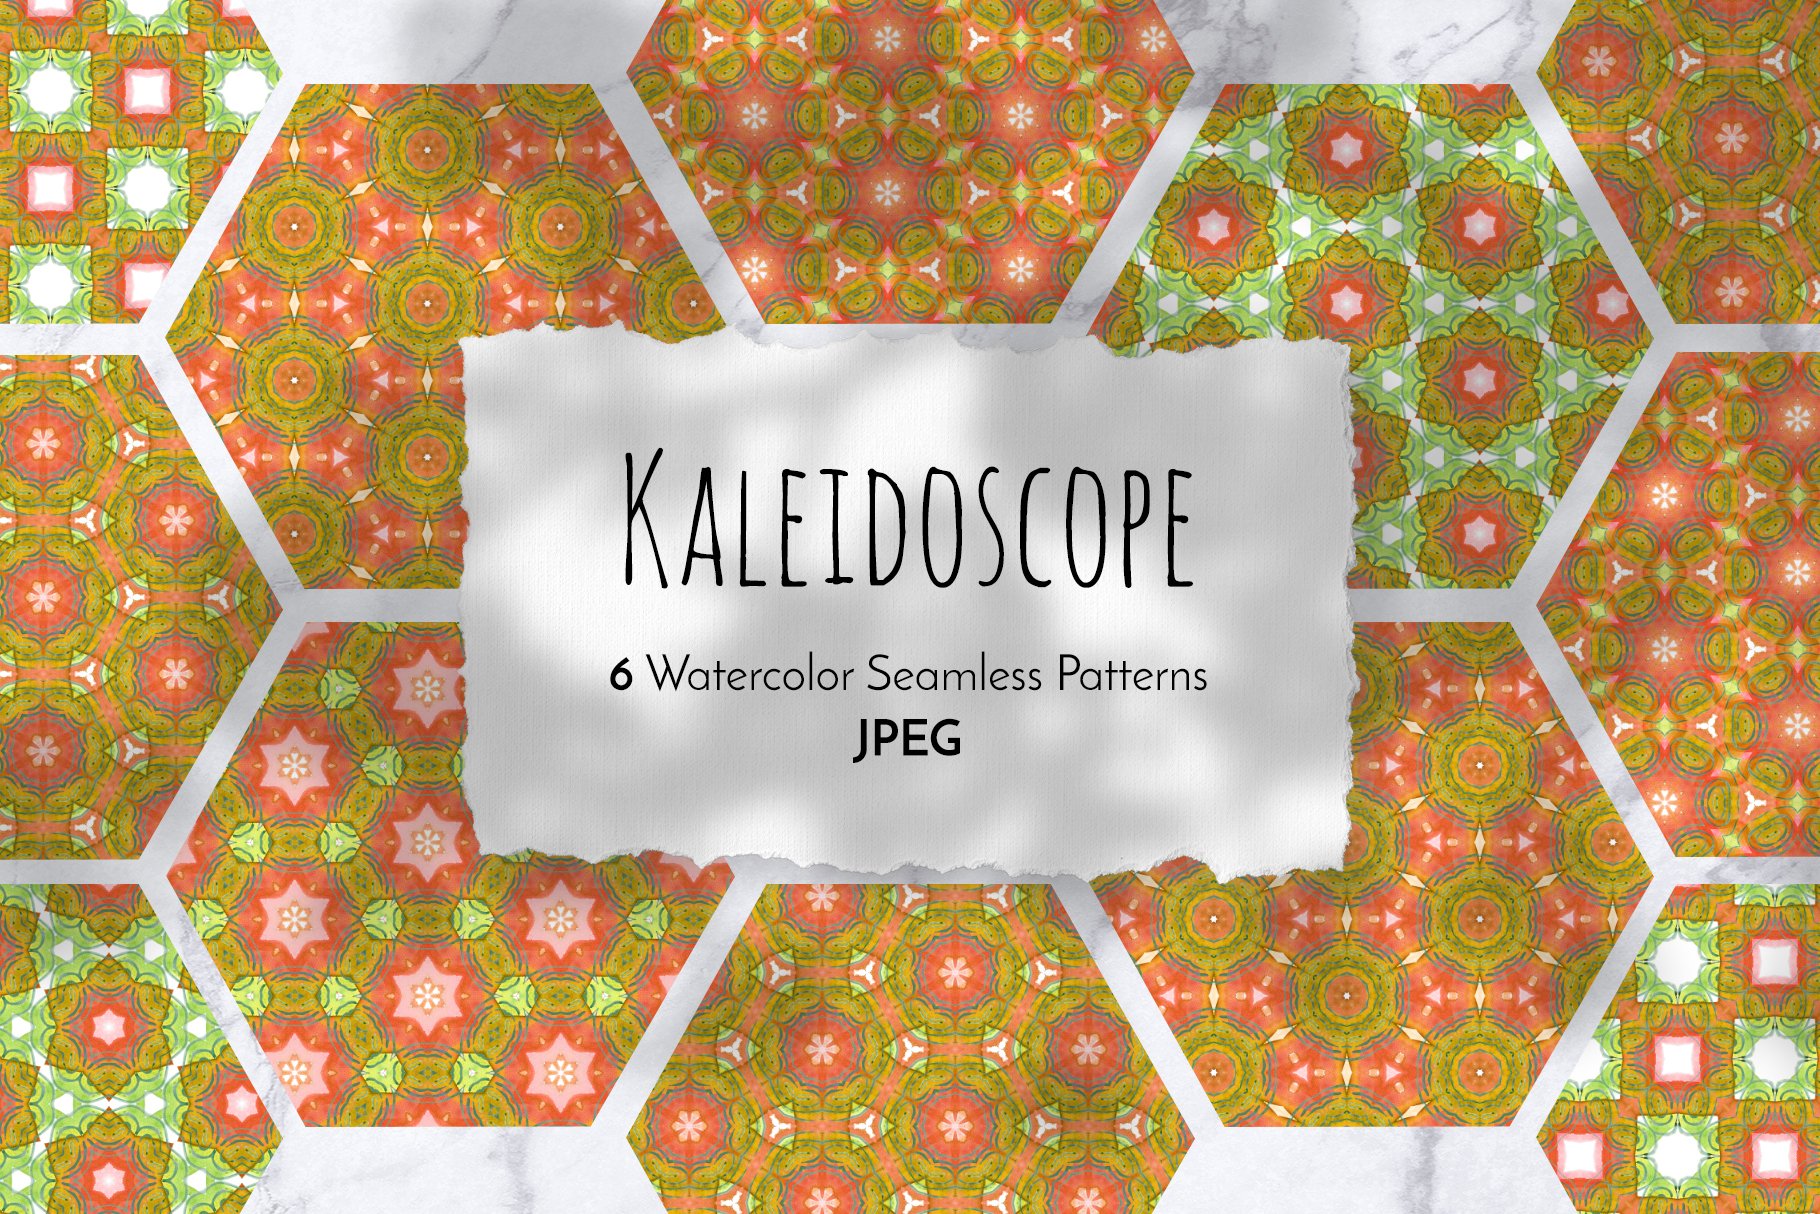 Kaleidoscope collection.